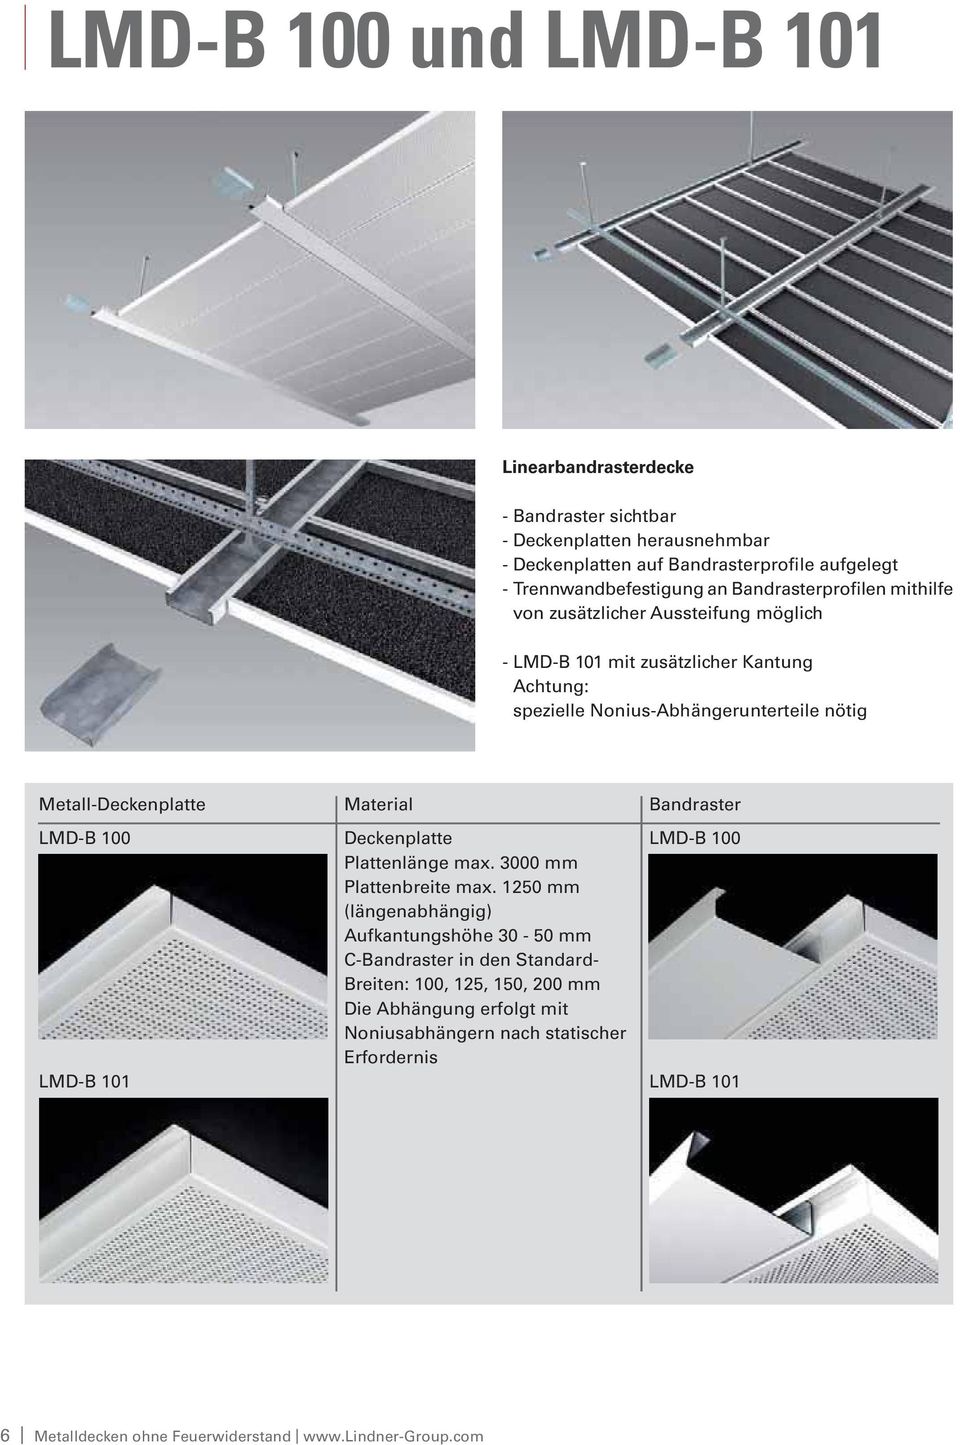 Material Bandraster LMD-B 100 LMD-B 101 Deckenplatte Plattenlänge max. 3000 mm Plattenbreite max.